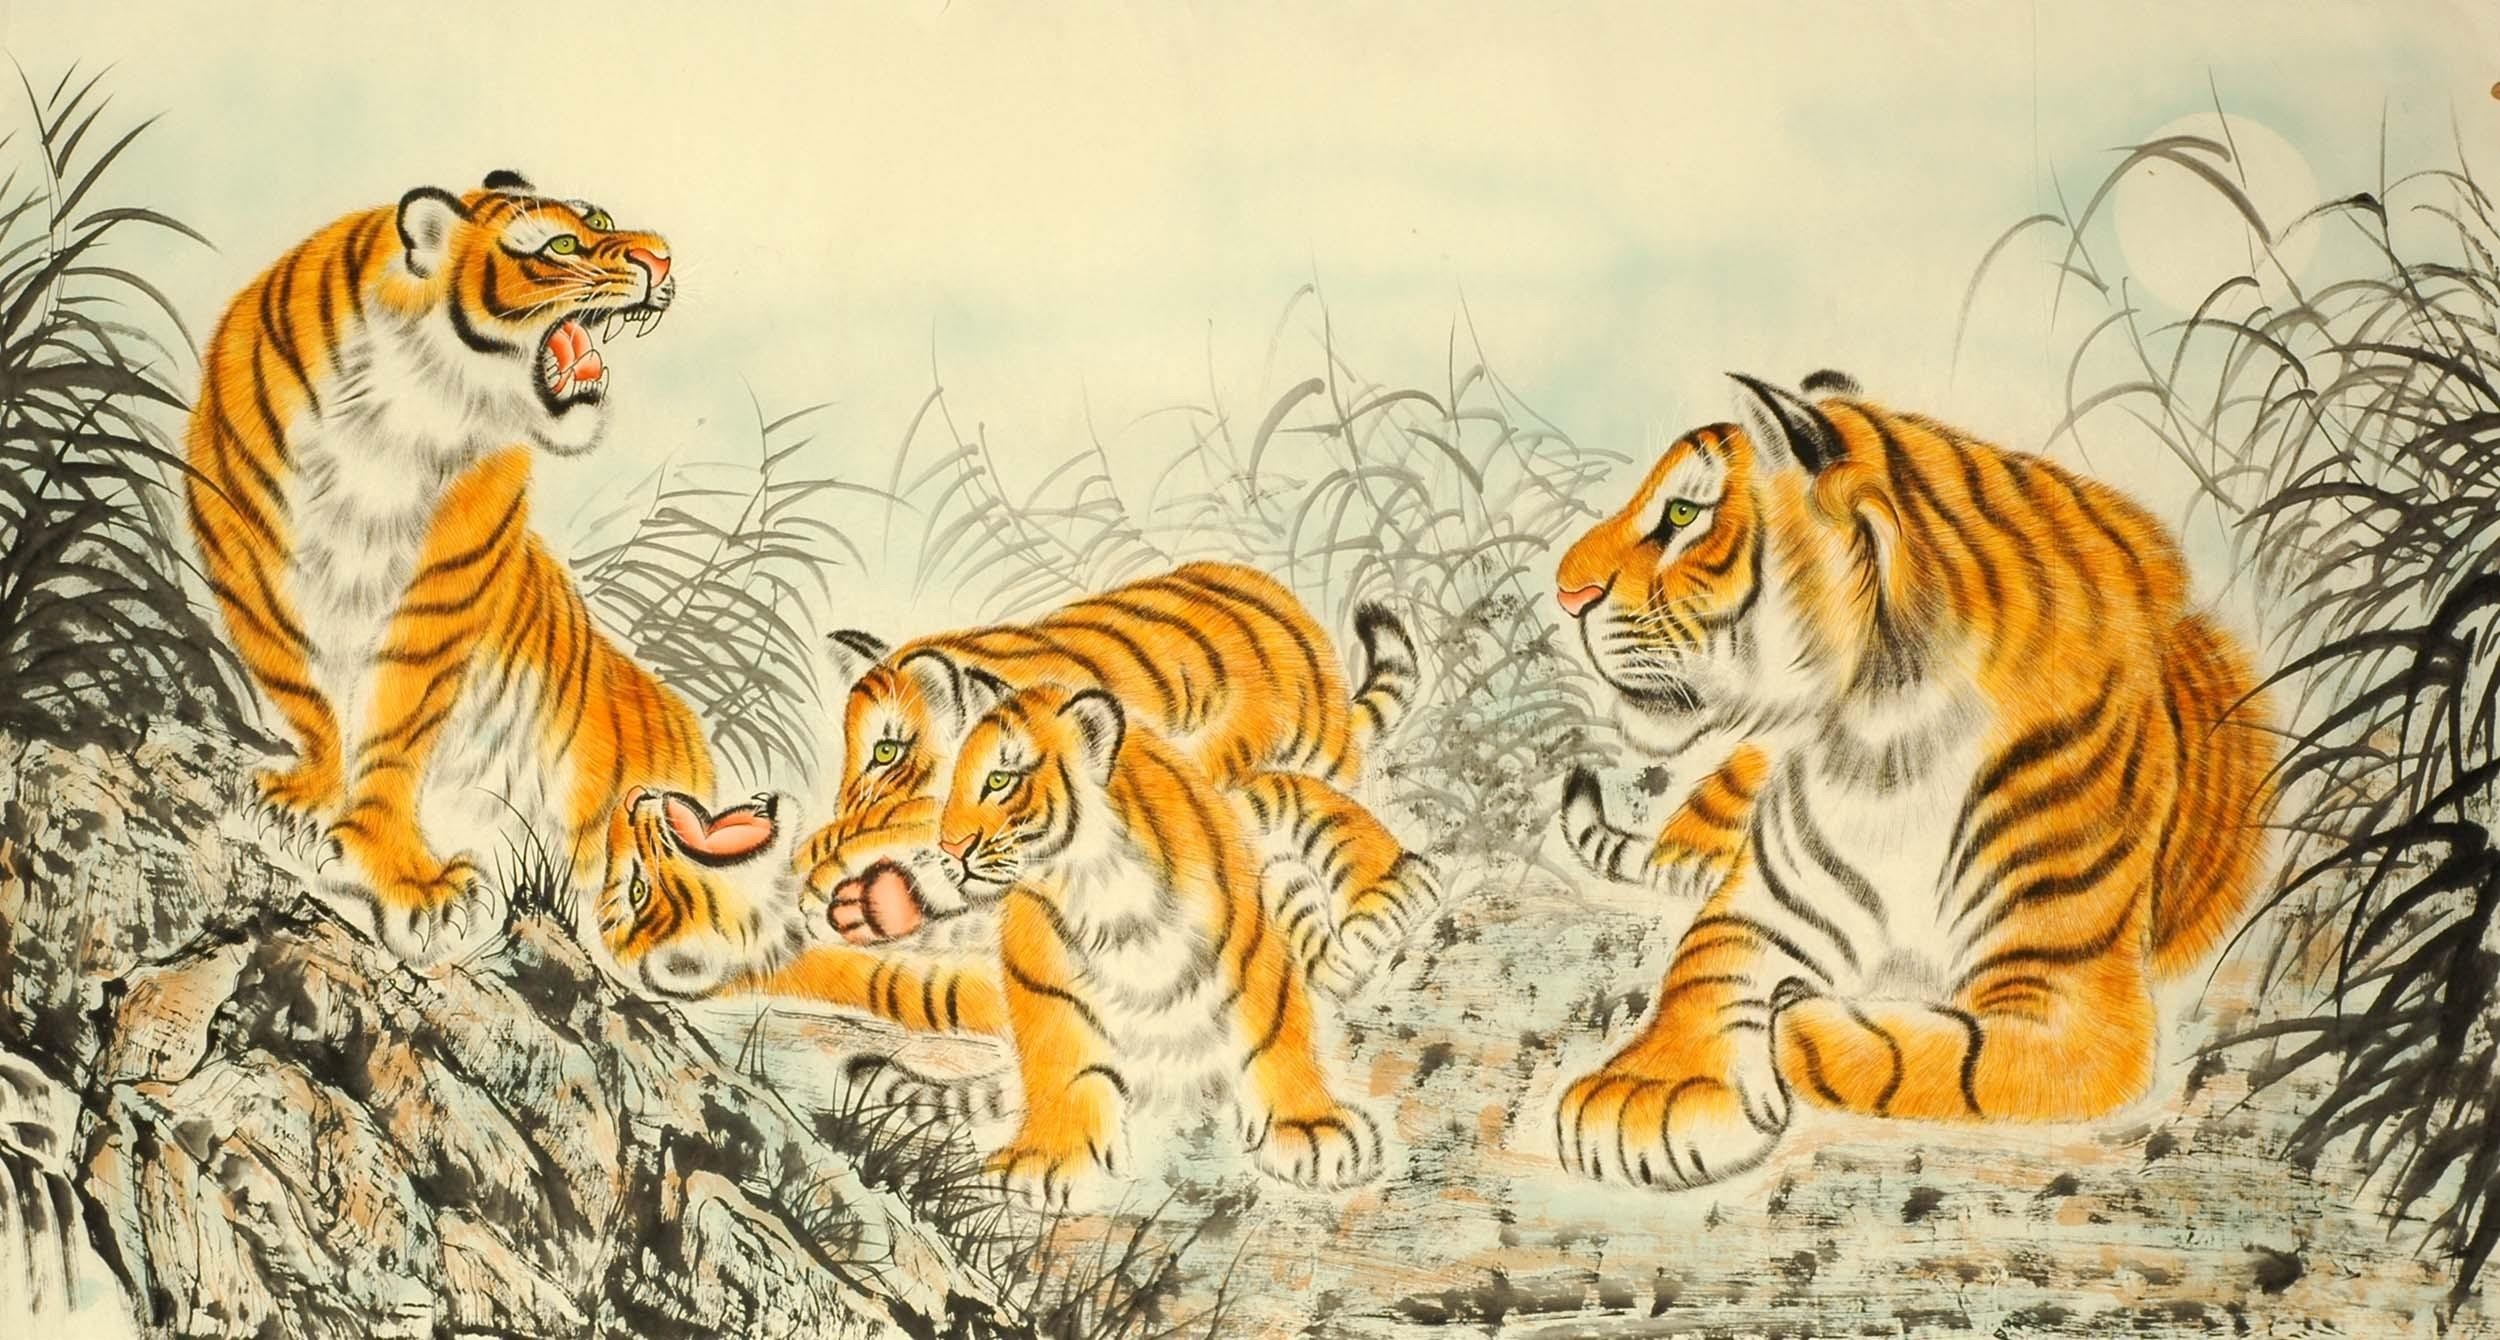 Chinese Tiger Painting - CNAG008381